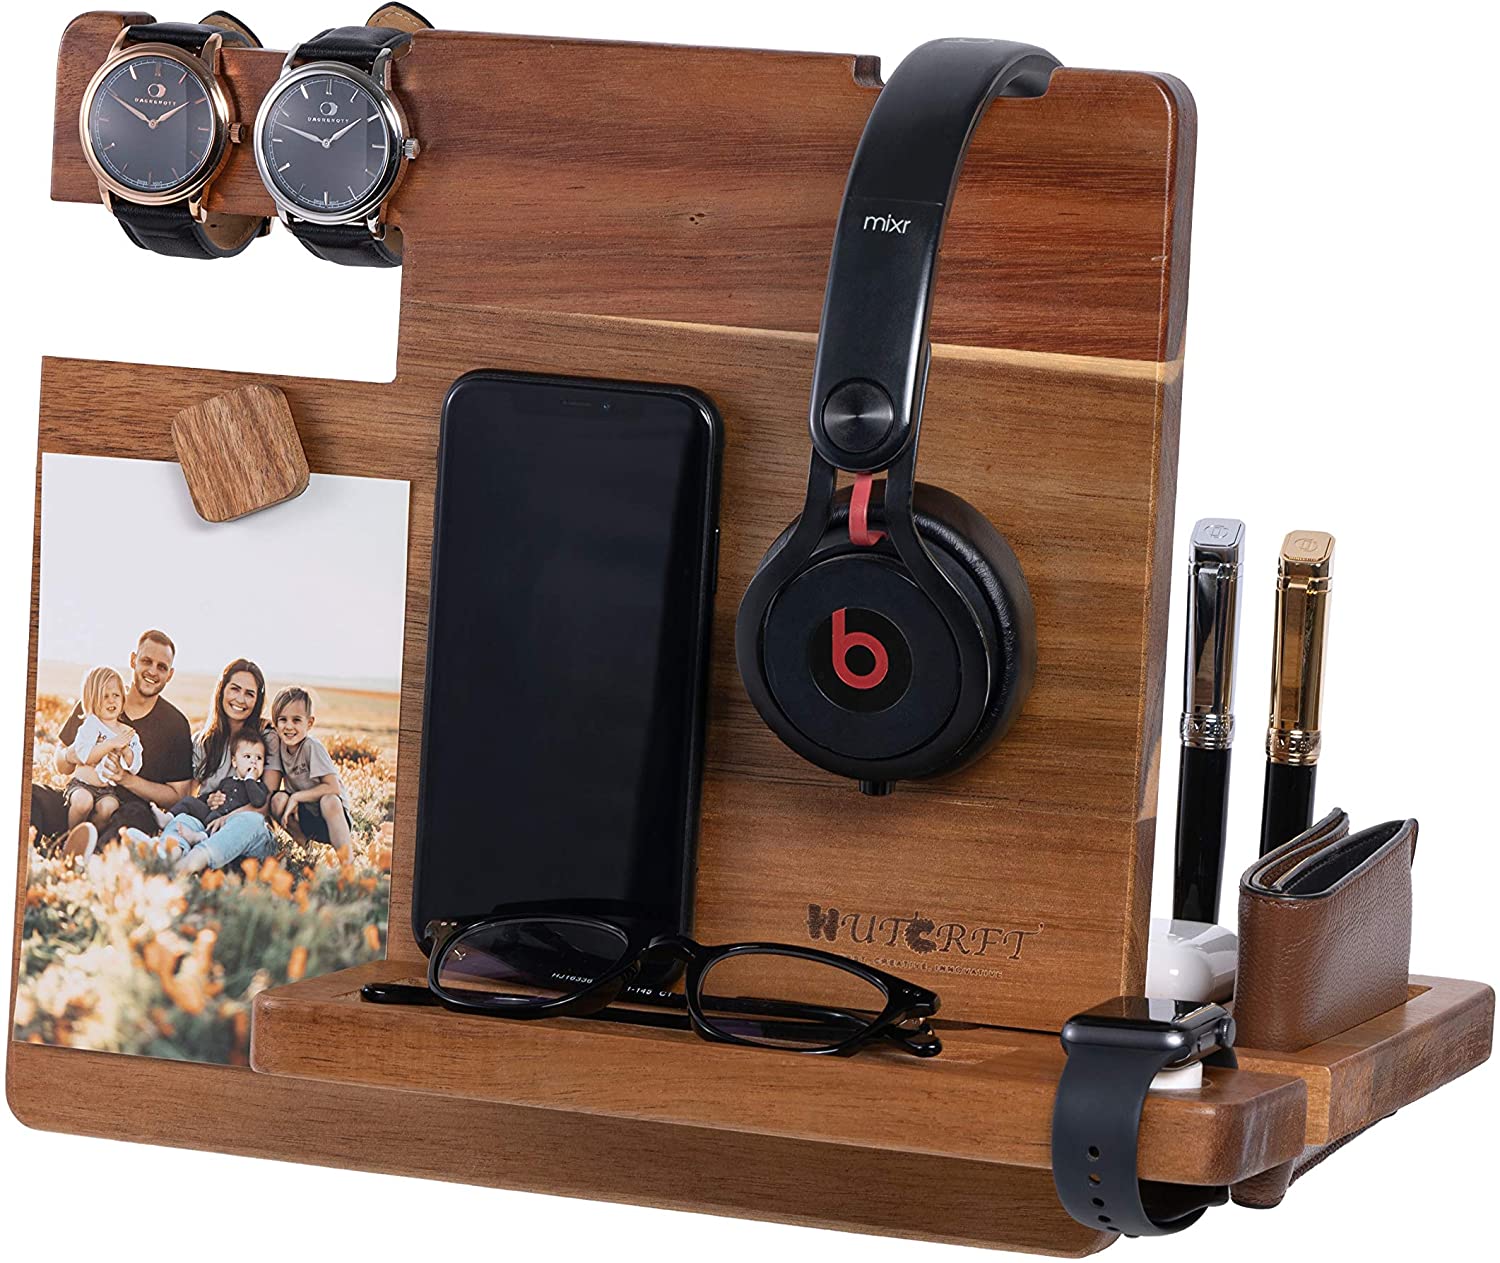 Soporte de madera WUTCRFT para organizar objetos como celular, audífonos y más.